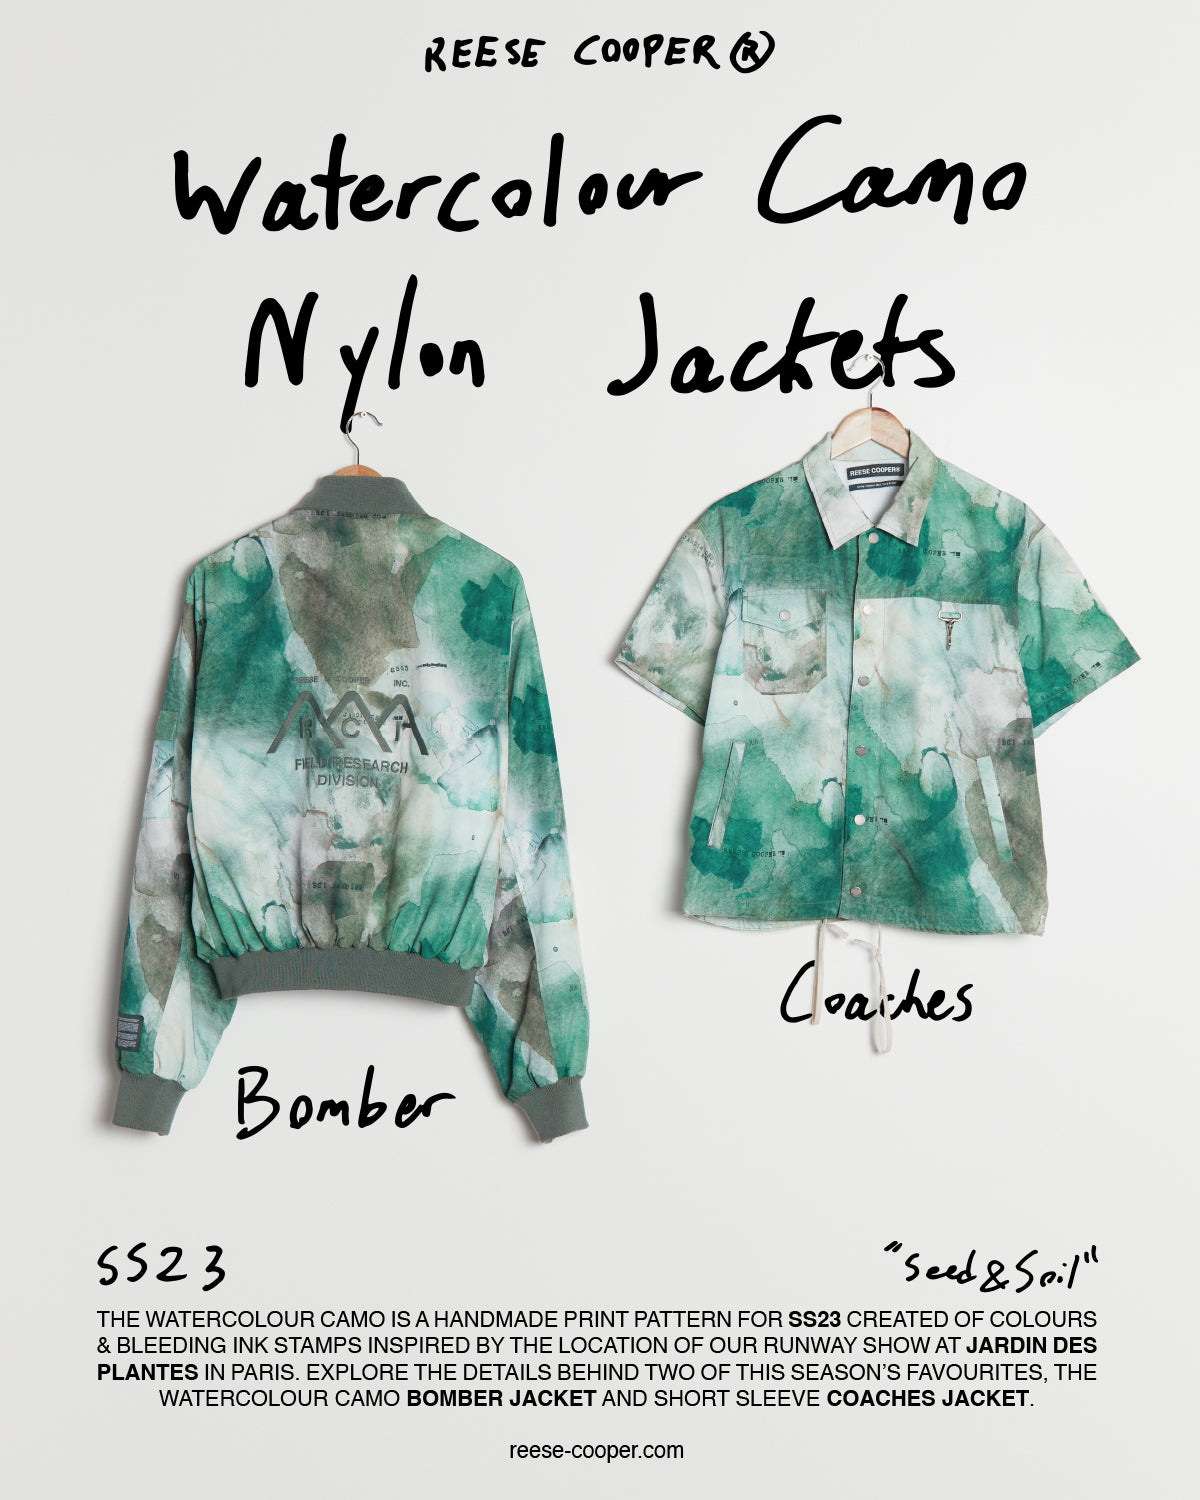 Product Guide: Watercolour Camo Nylon Jackets